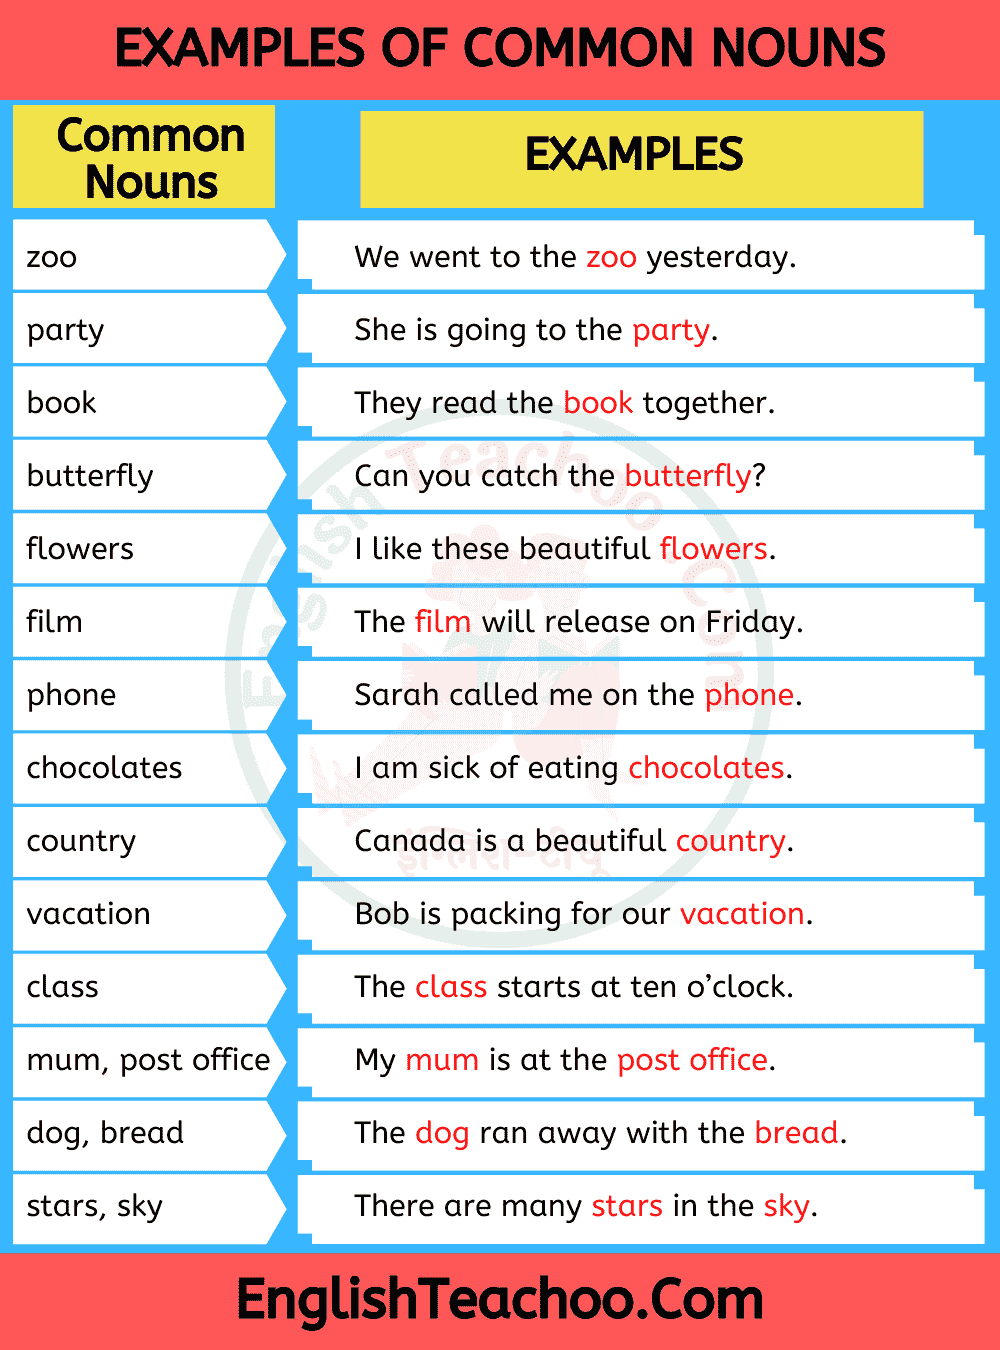 what-are-10-examples-of-common-nouns-englishteachoo